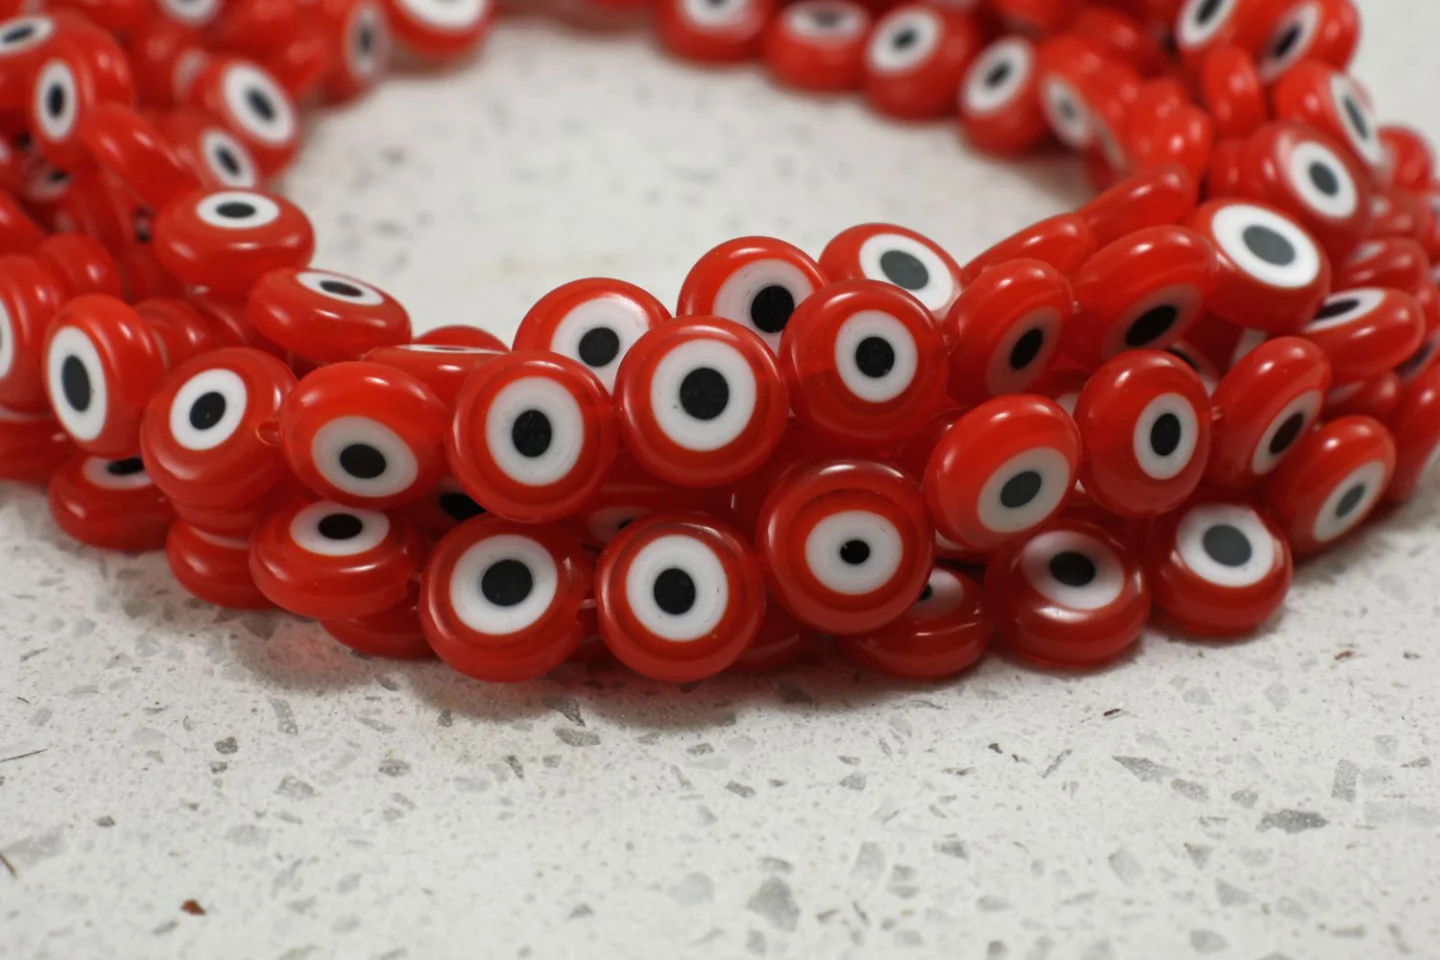 12mm-red-glass-evil-eye-beads.